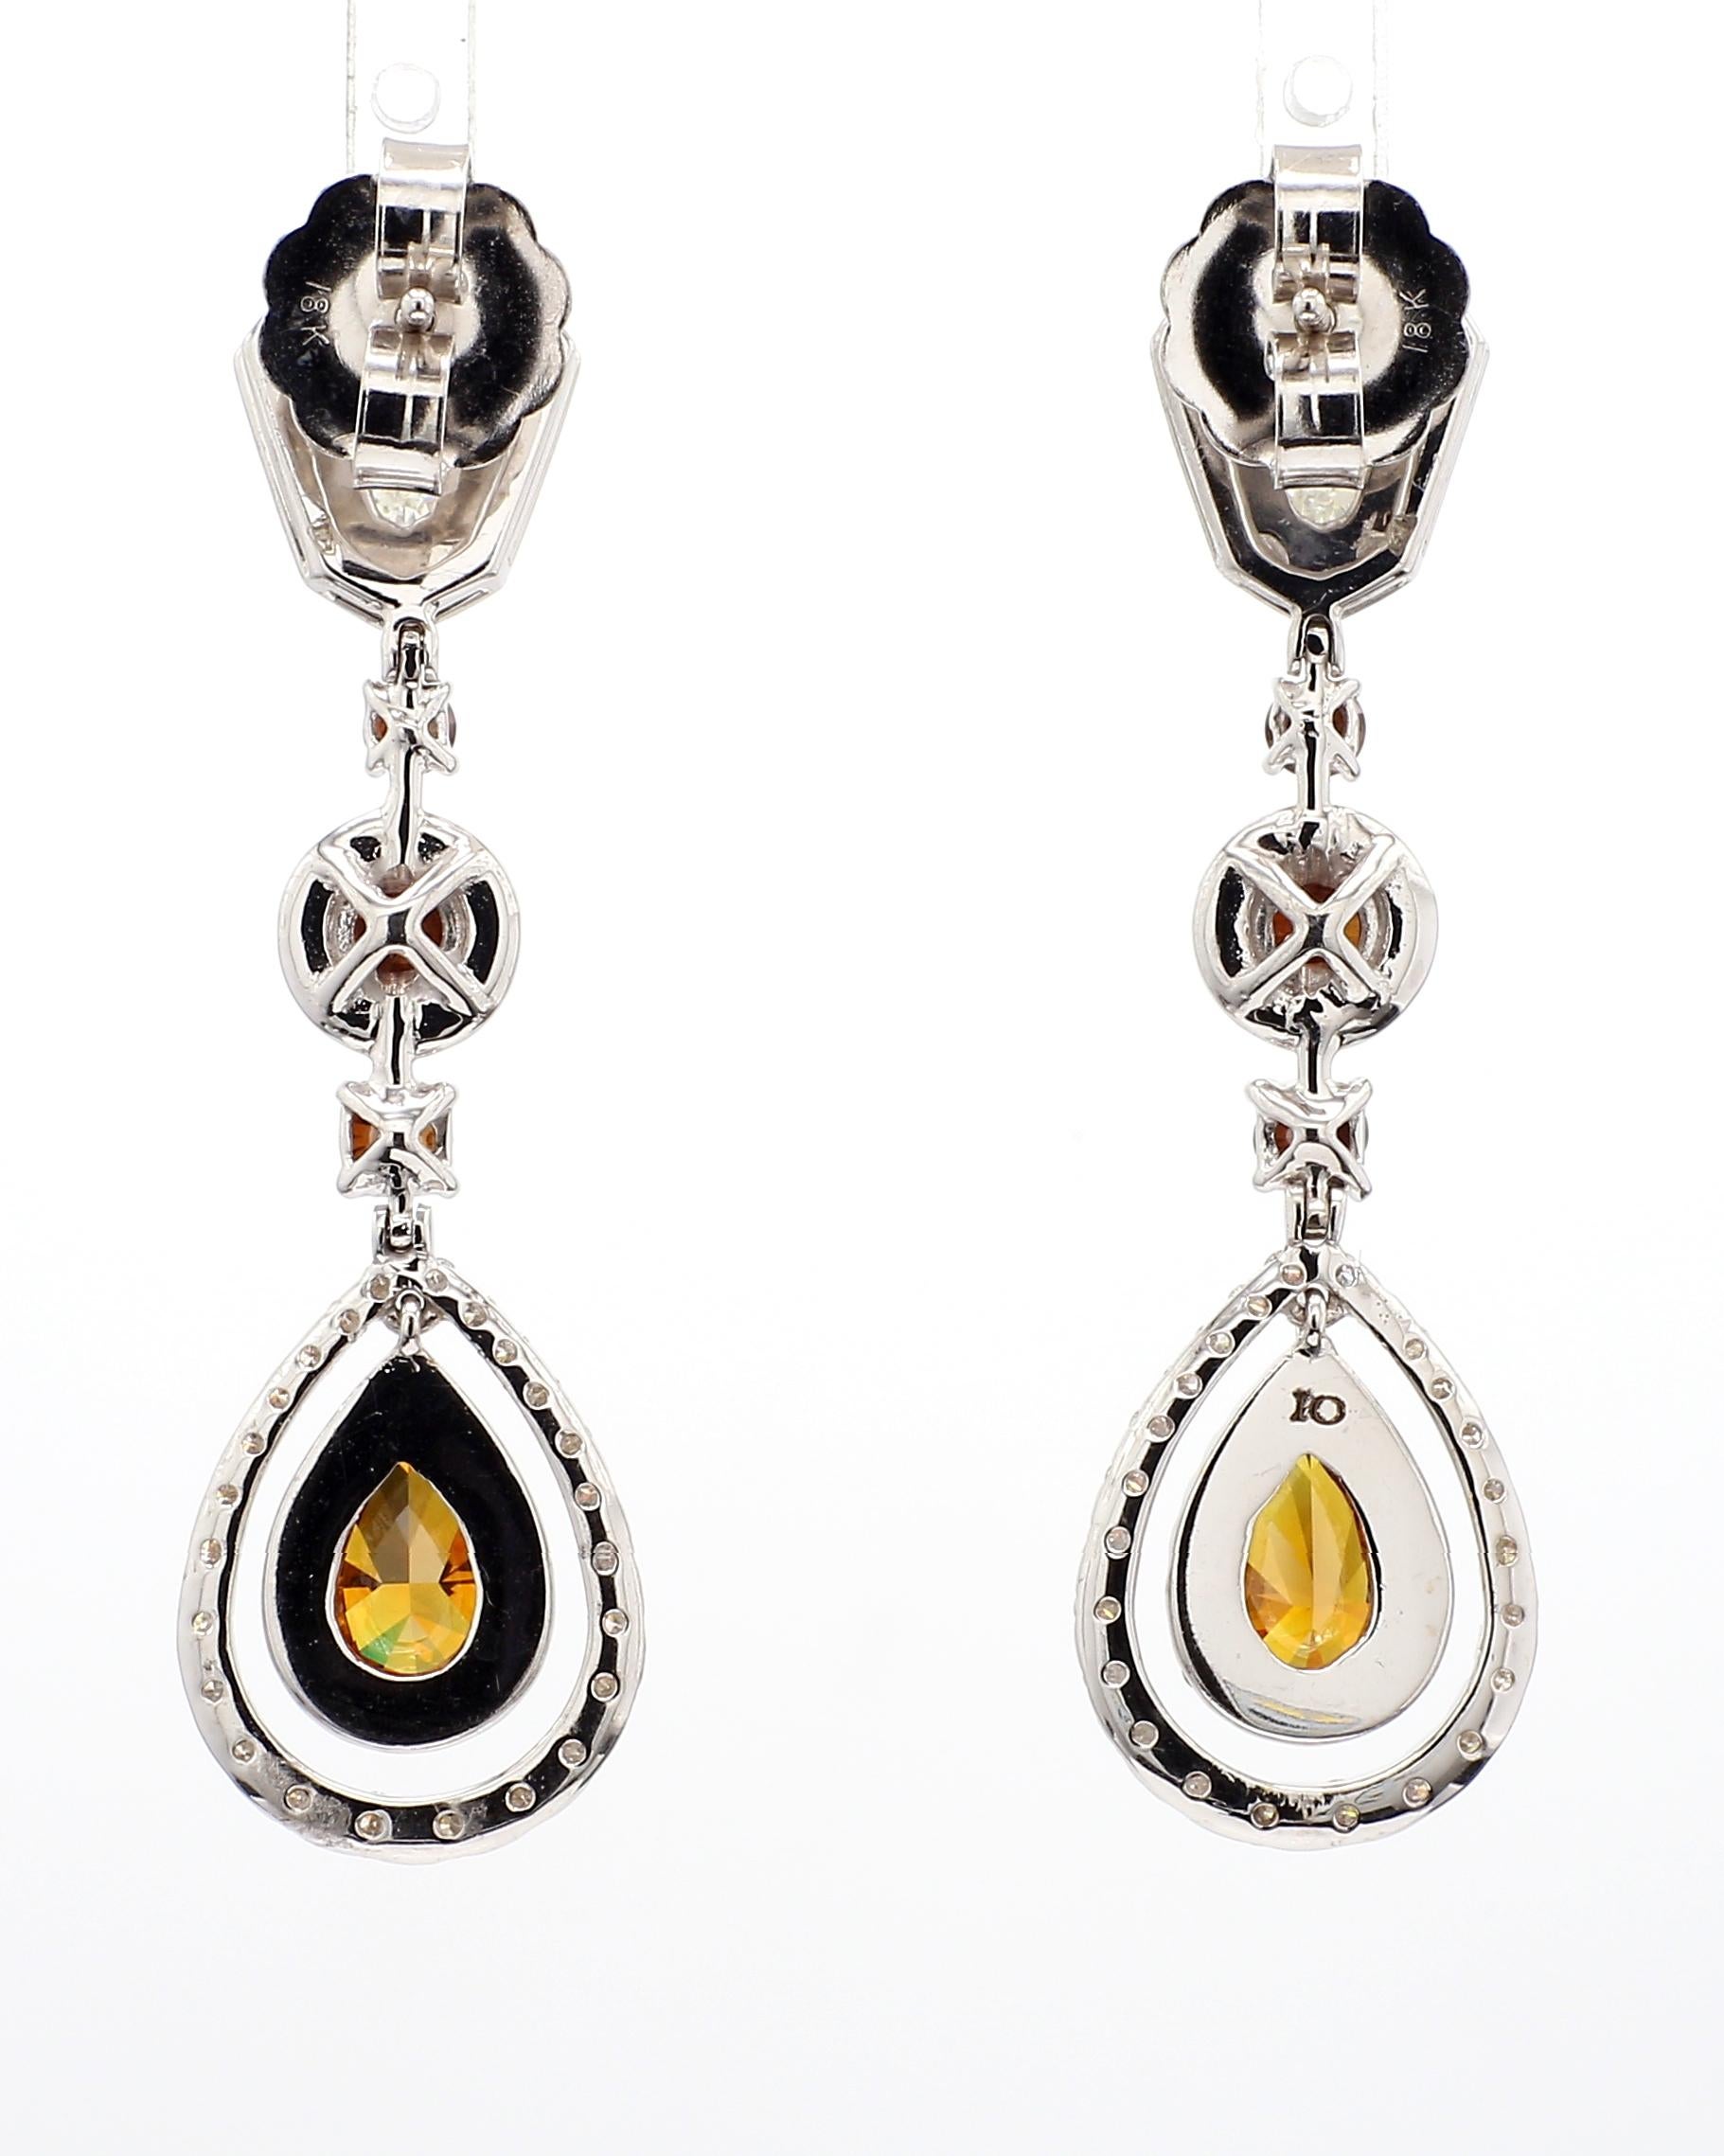 Women's 7.31 Carat Brown And White Diamond Teardrop Earrings Set in 18K White Gold. For Sale